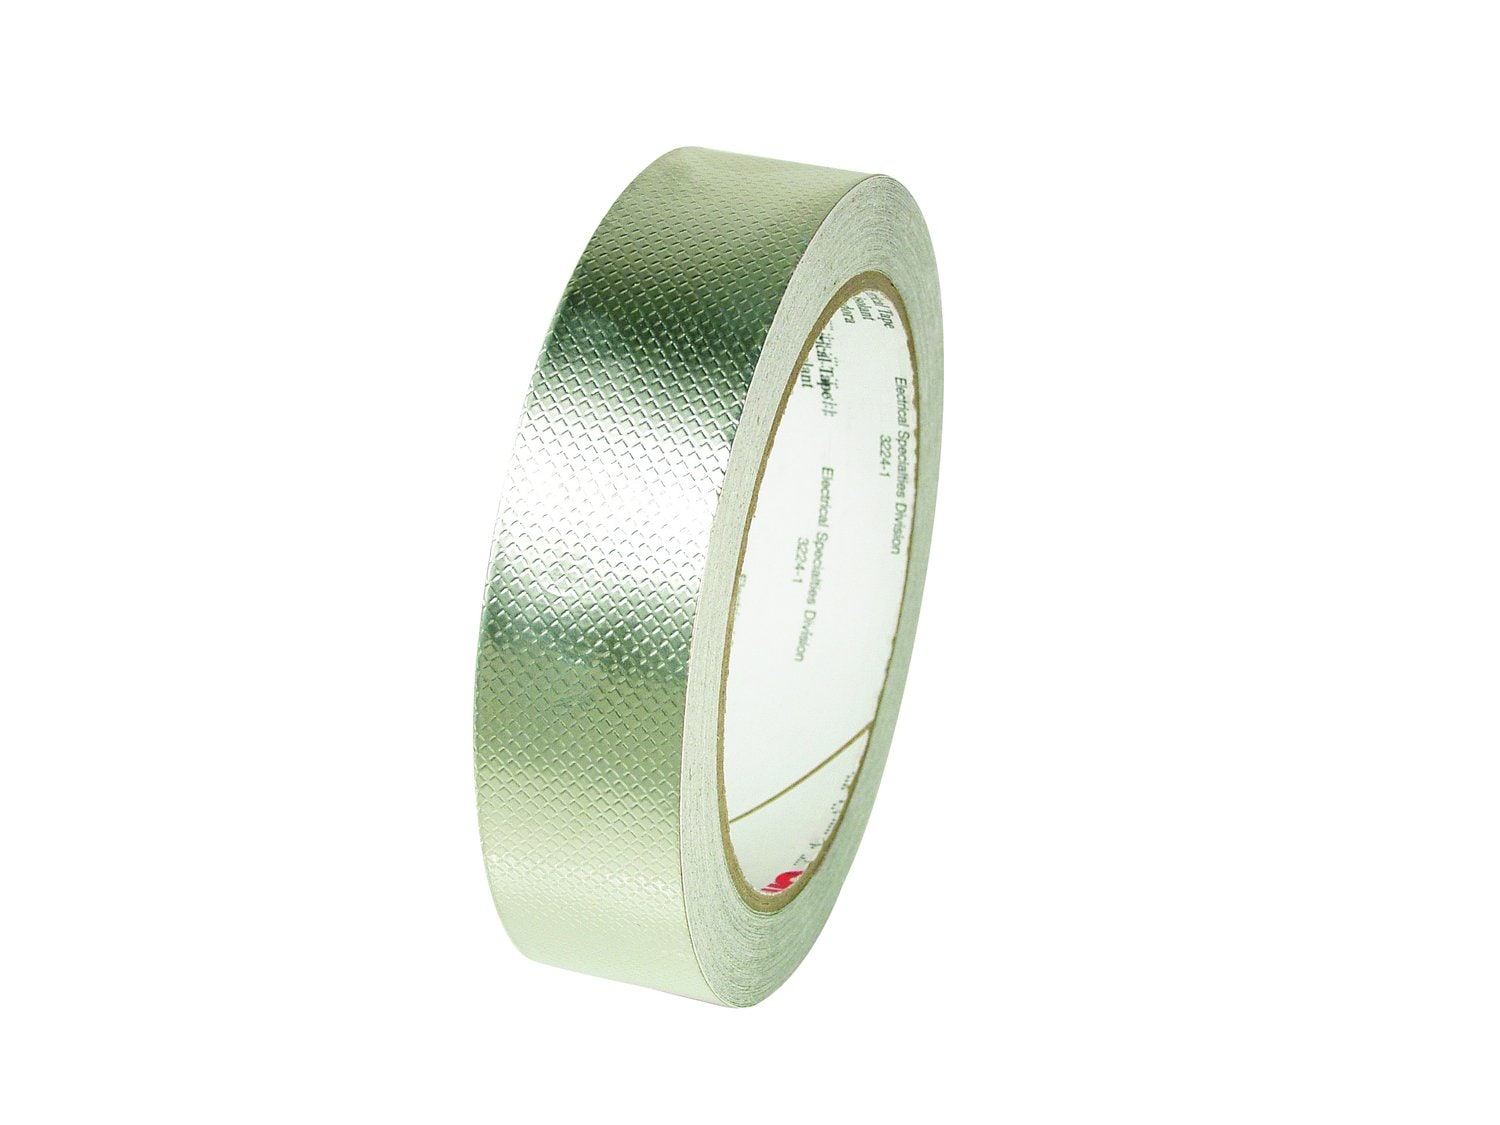 7010297666 - 3M Embossed Tin-Plated Copper Foil EMI Shielding Tape 1345, 3 in x 18
yd, 3 in Paper Core, 4 Rolls/Case